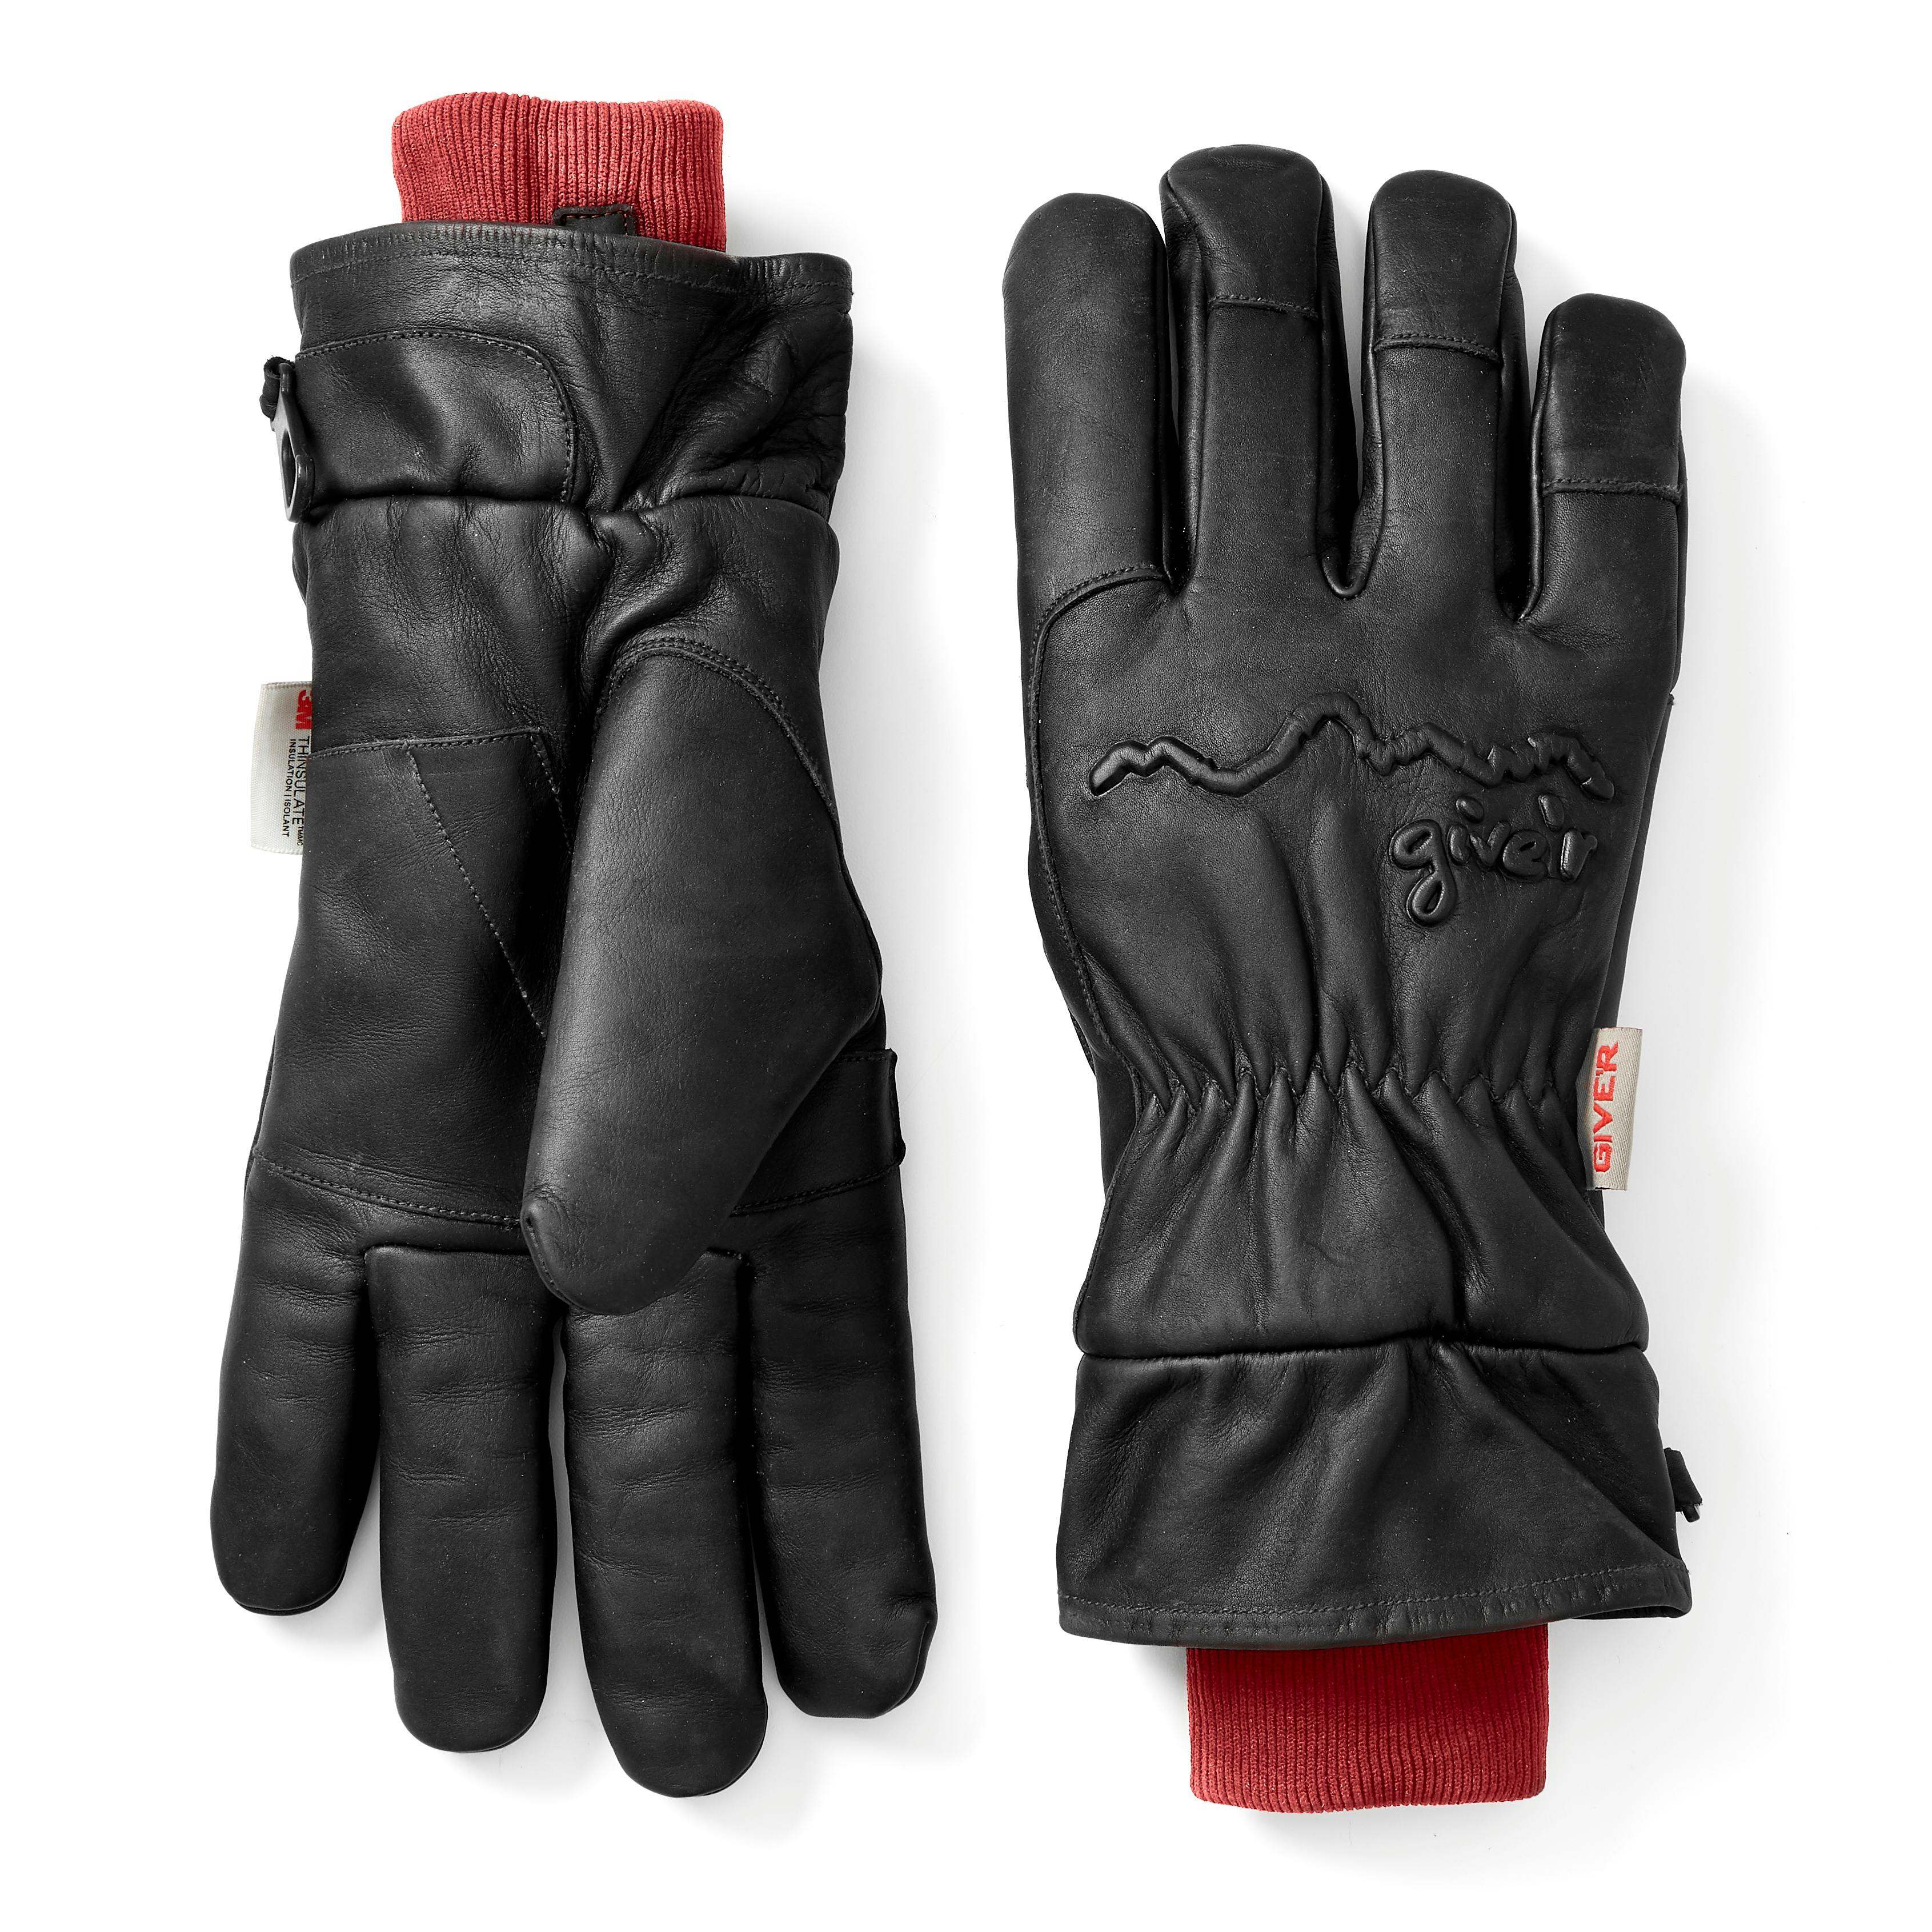 Give'r 4 Season Glove w/ Wax Coating - Exclusive